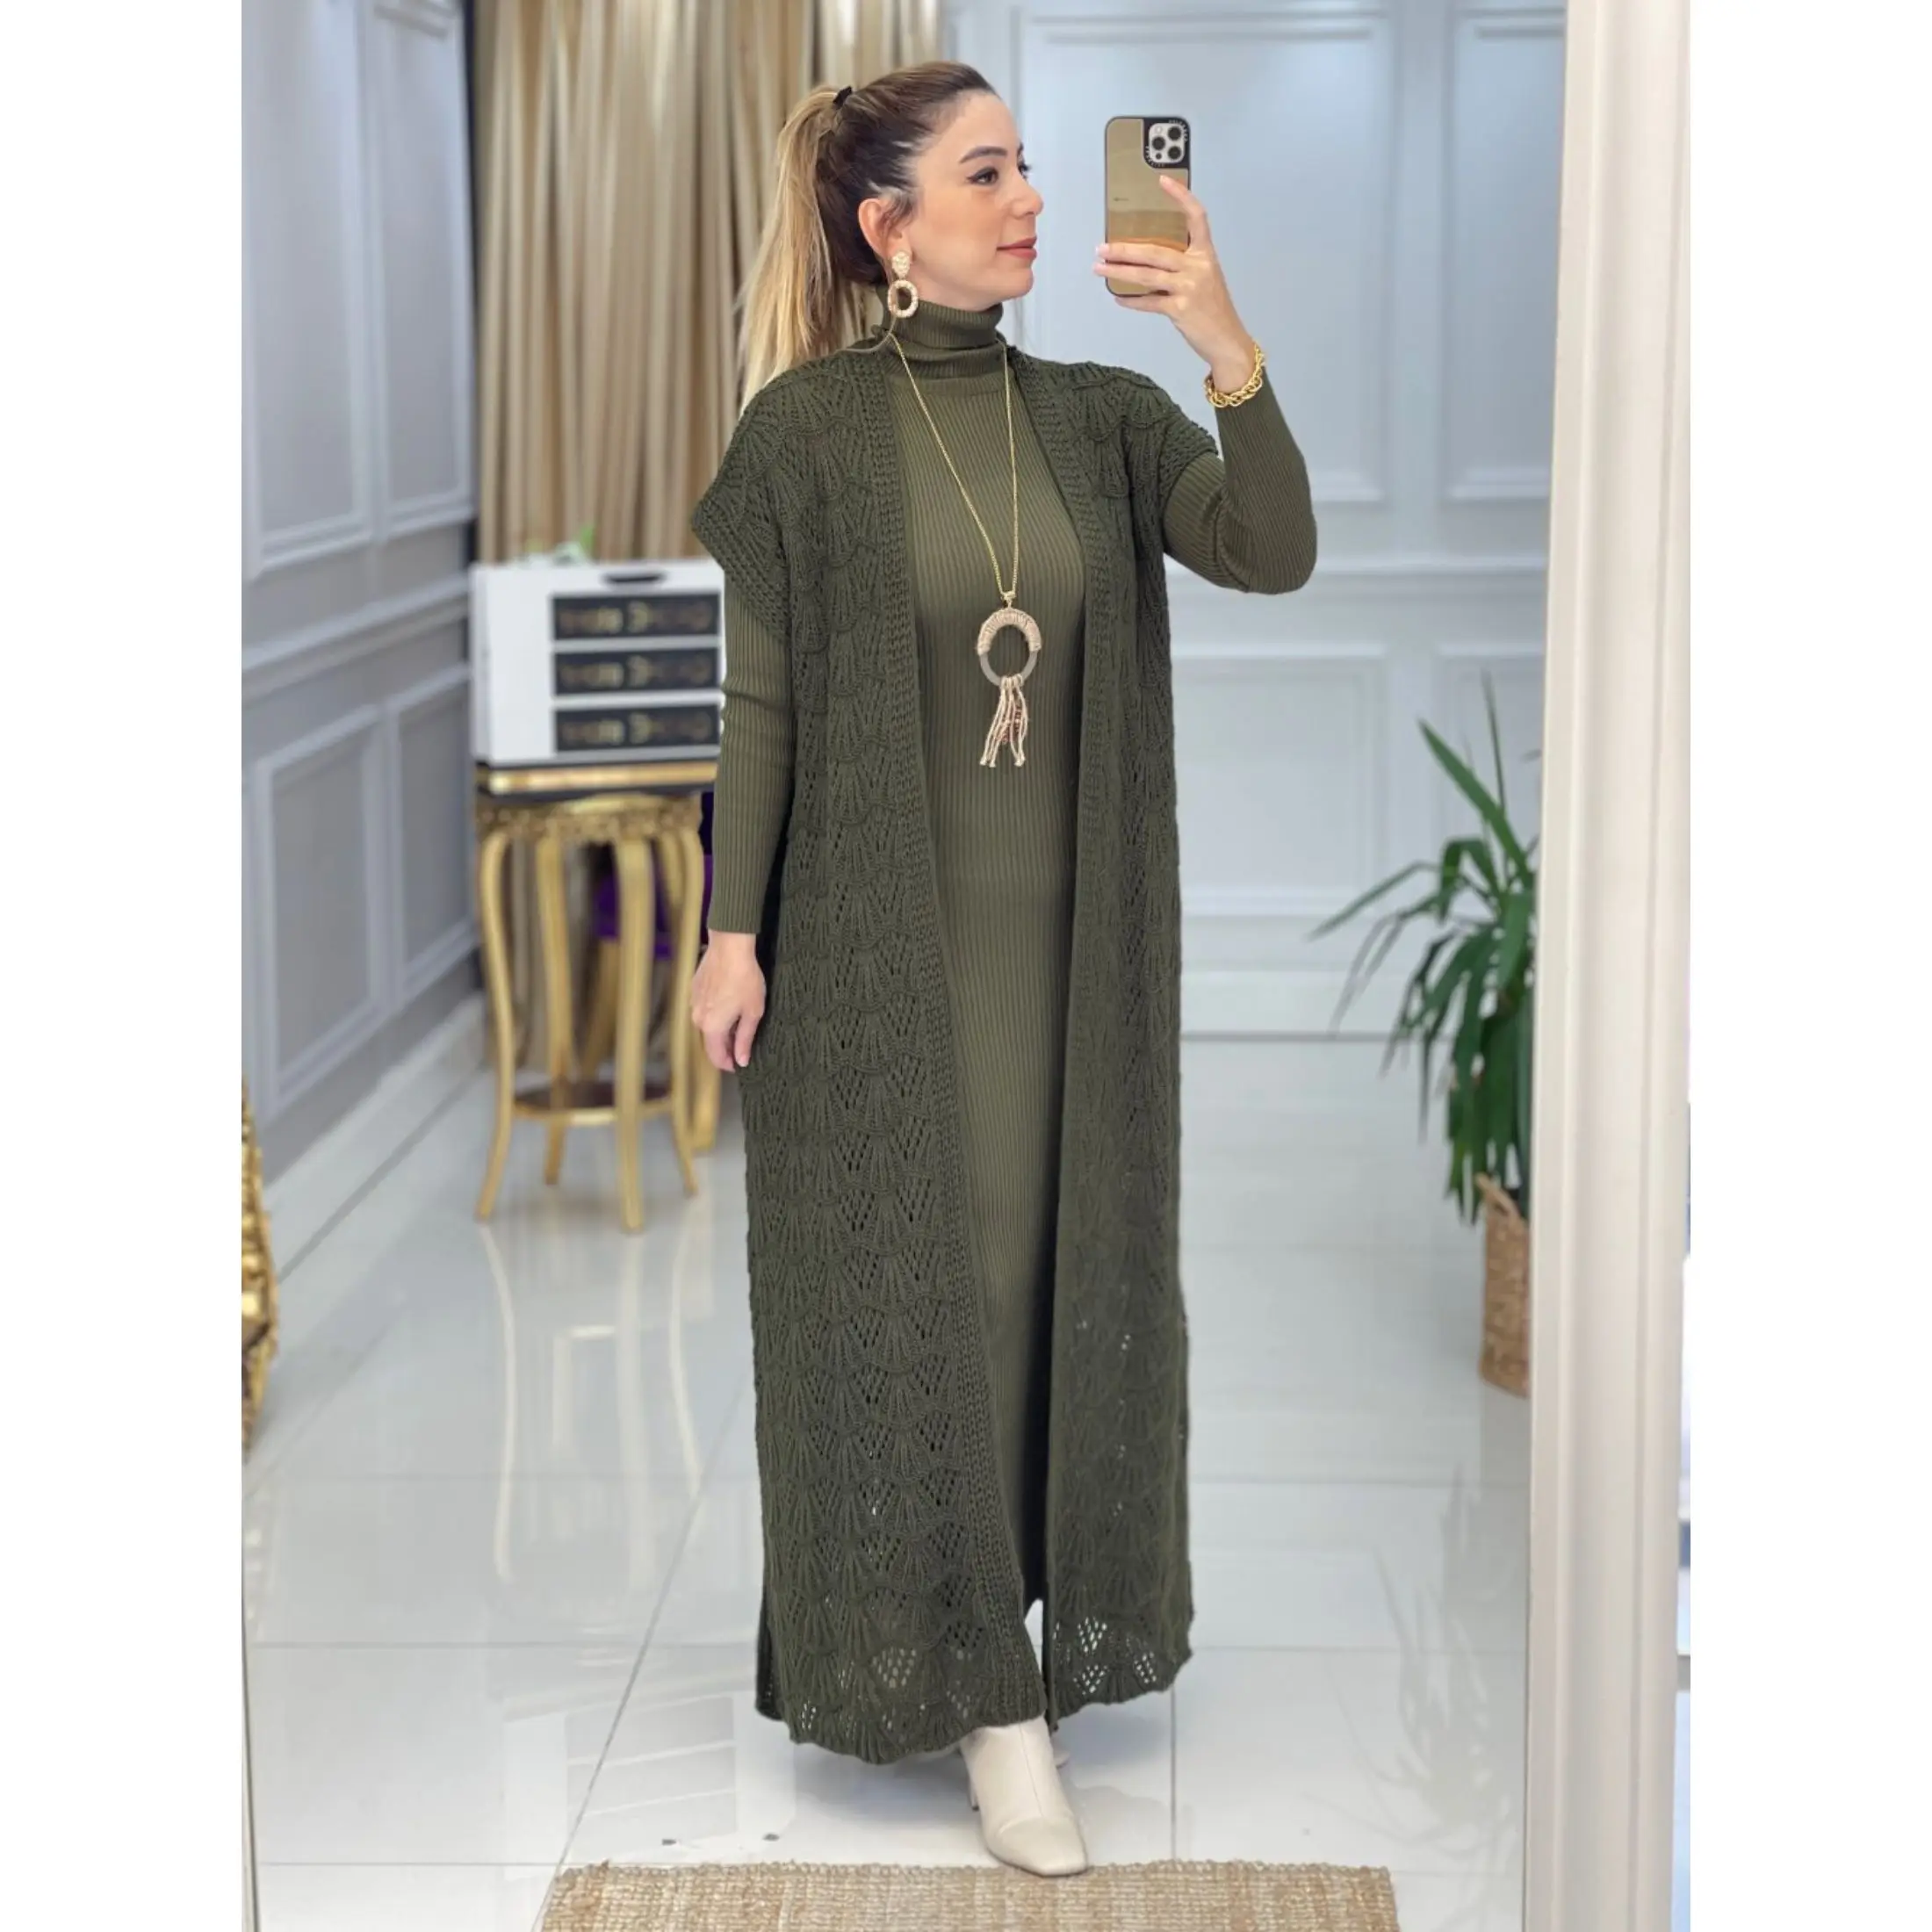 Two Piece Muslim Sets Maxi Dress and Lace Detailed Cardigan Abaya Set Modest Islamic Clothing Sets Hijab Turkish Dresses Dubai